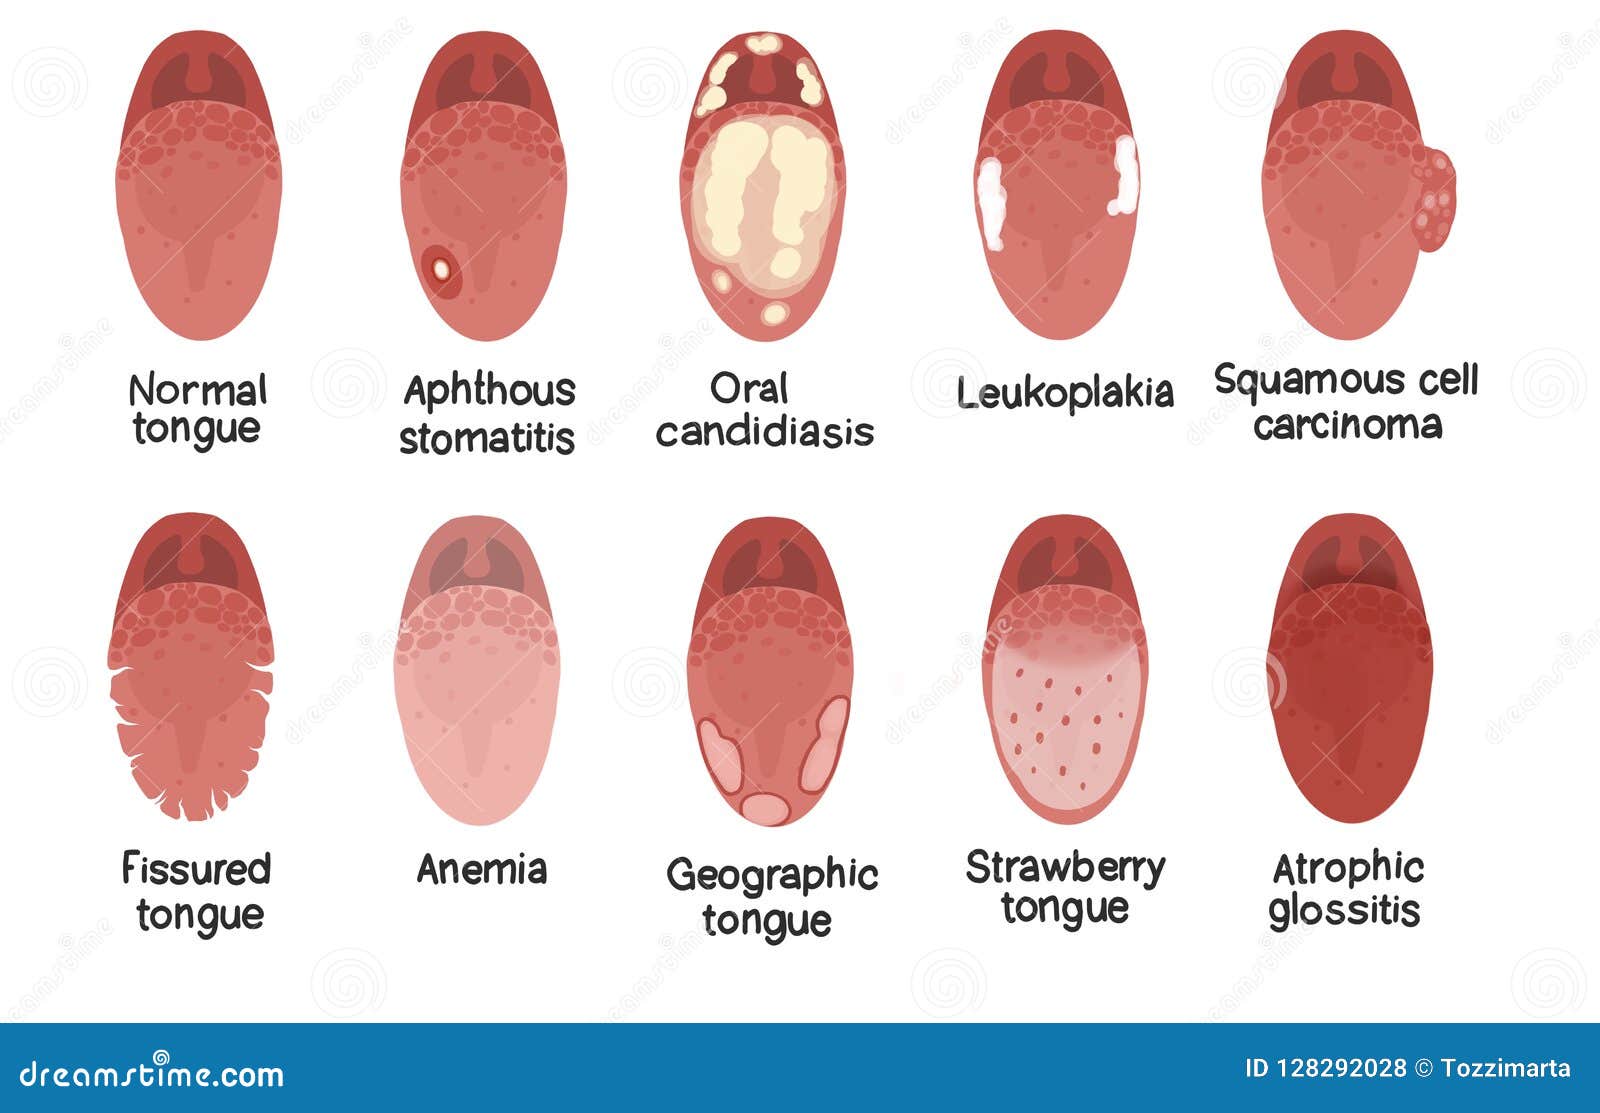 Disease Of The Tongue Cartoon Vector | CartoonDealer.com #78947545